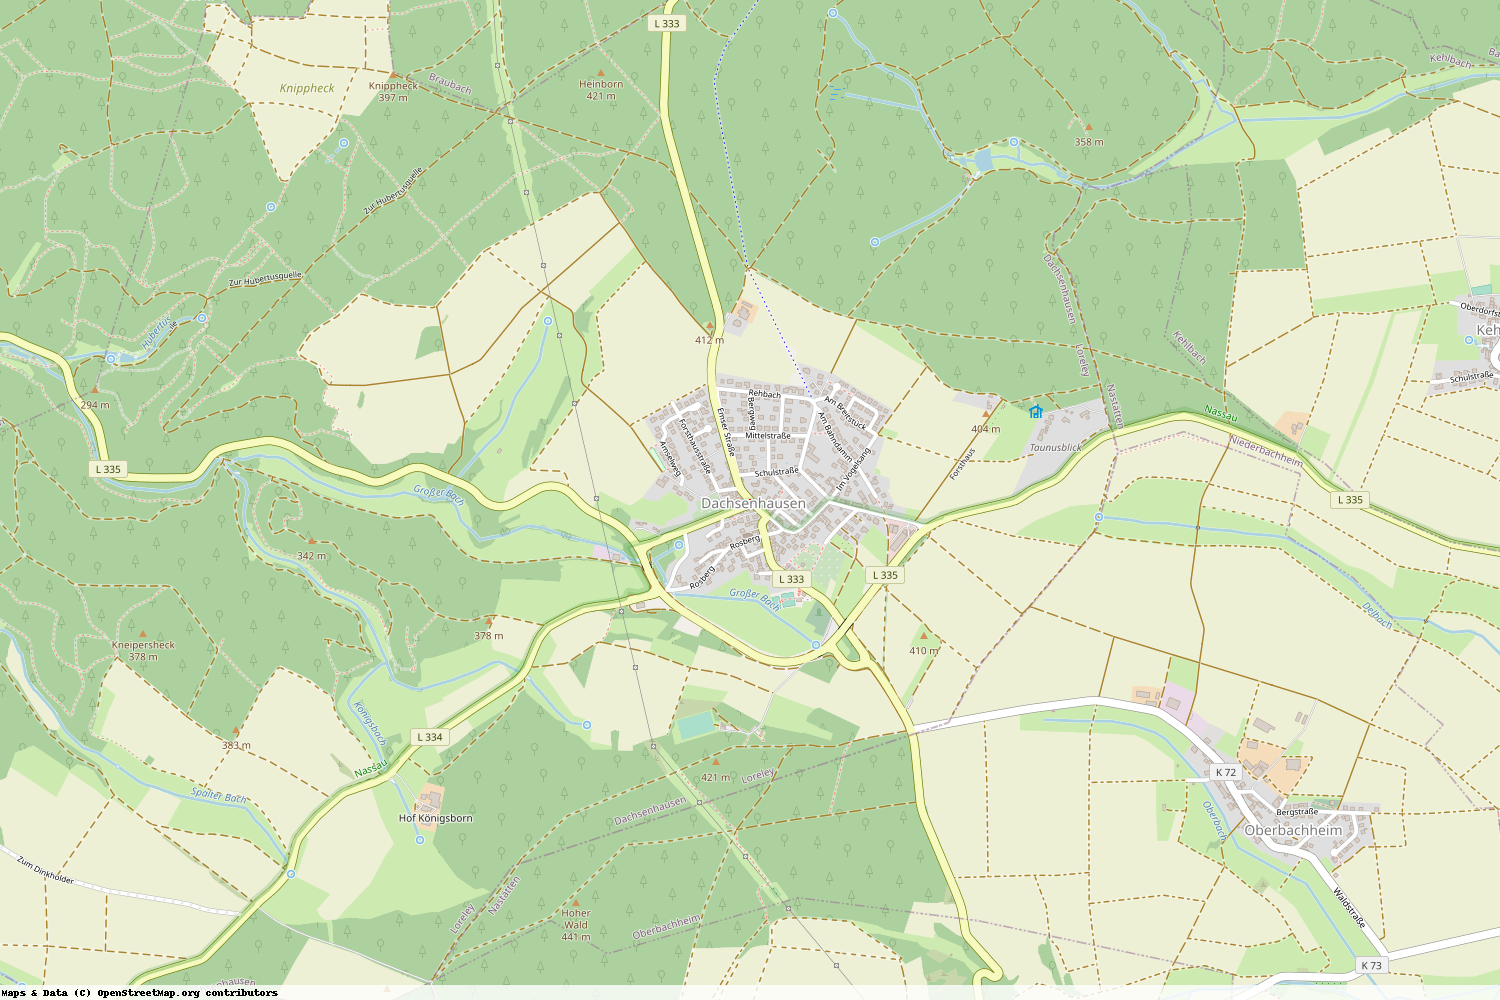 Ist gerade Stromausfall in Rheinland-Pfalz - Rhein-Lahn-Kreis - Dachsenhausen?